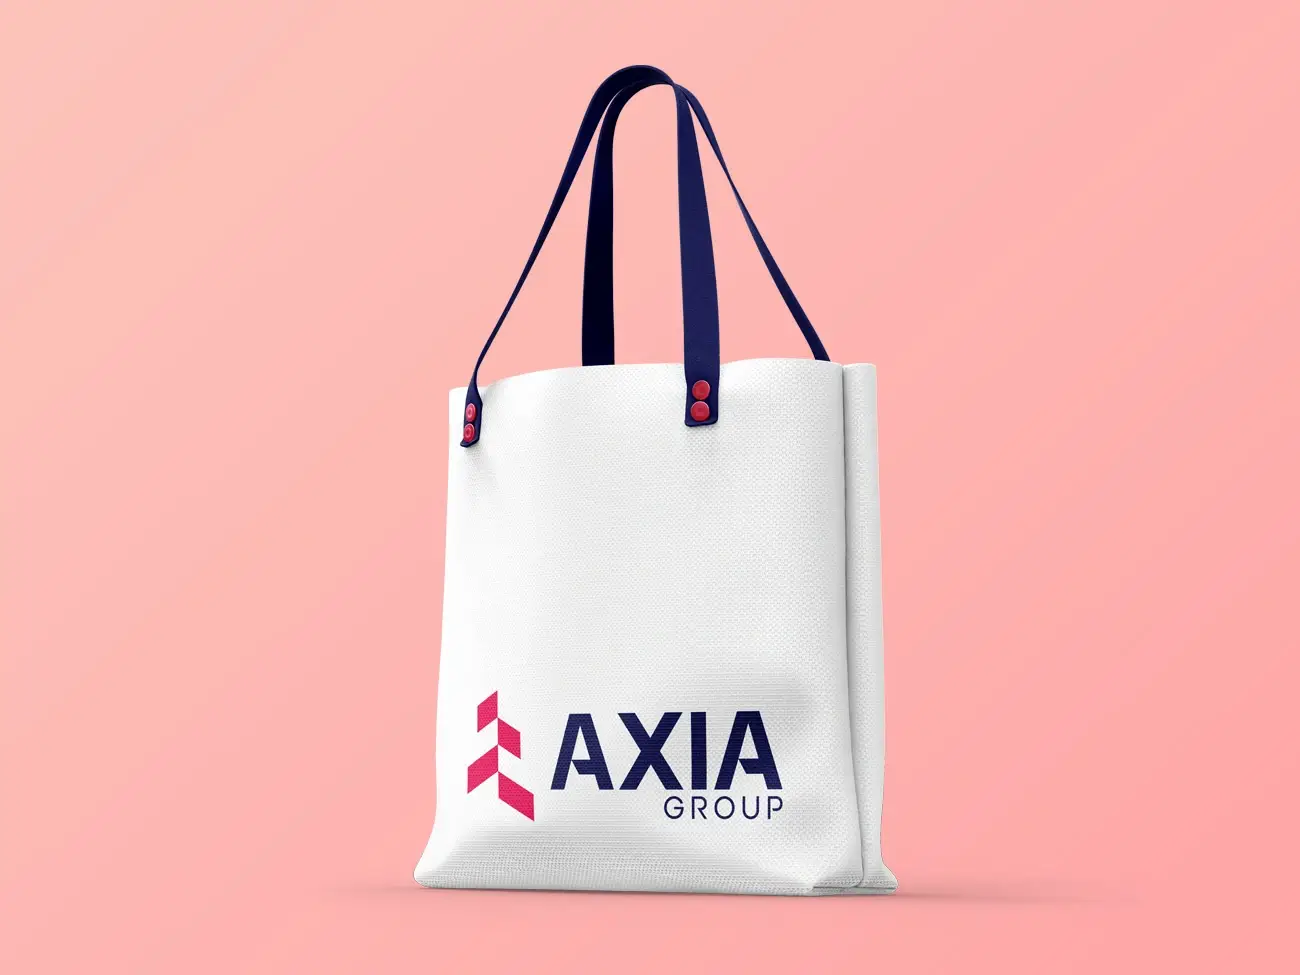 Visuel identitet til Axia Group